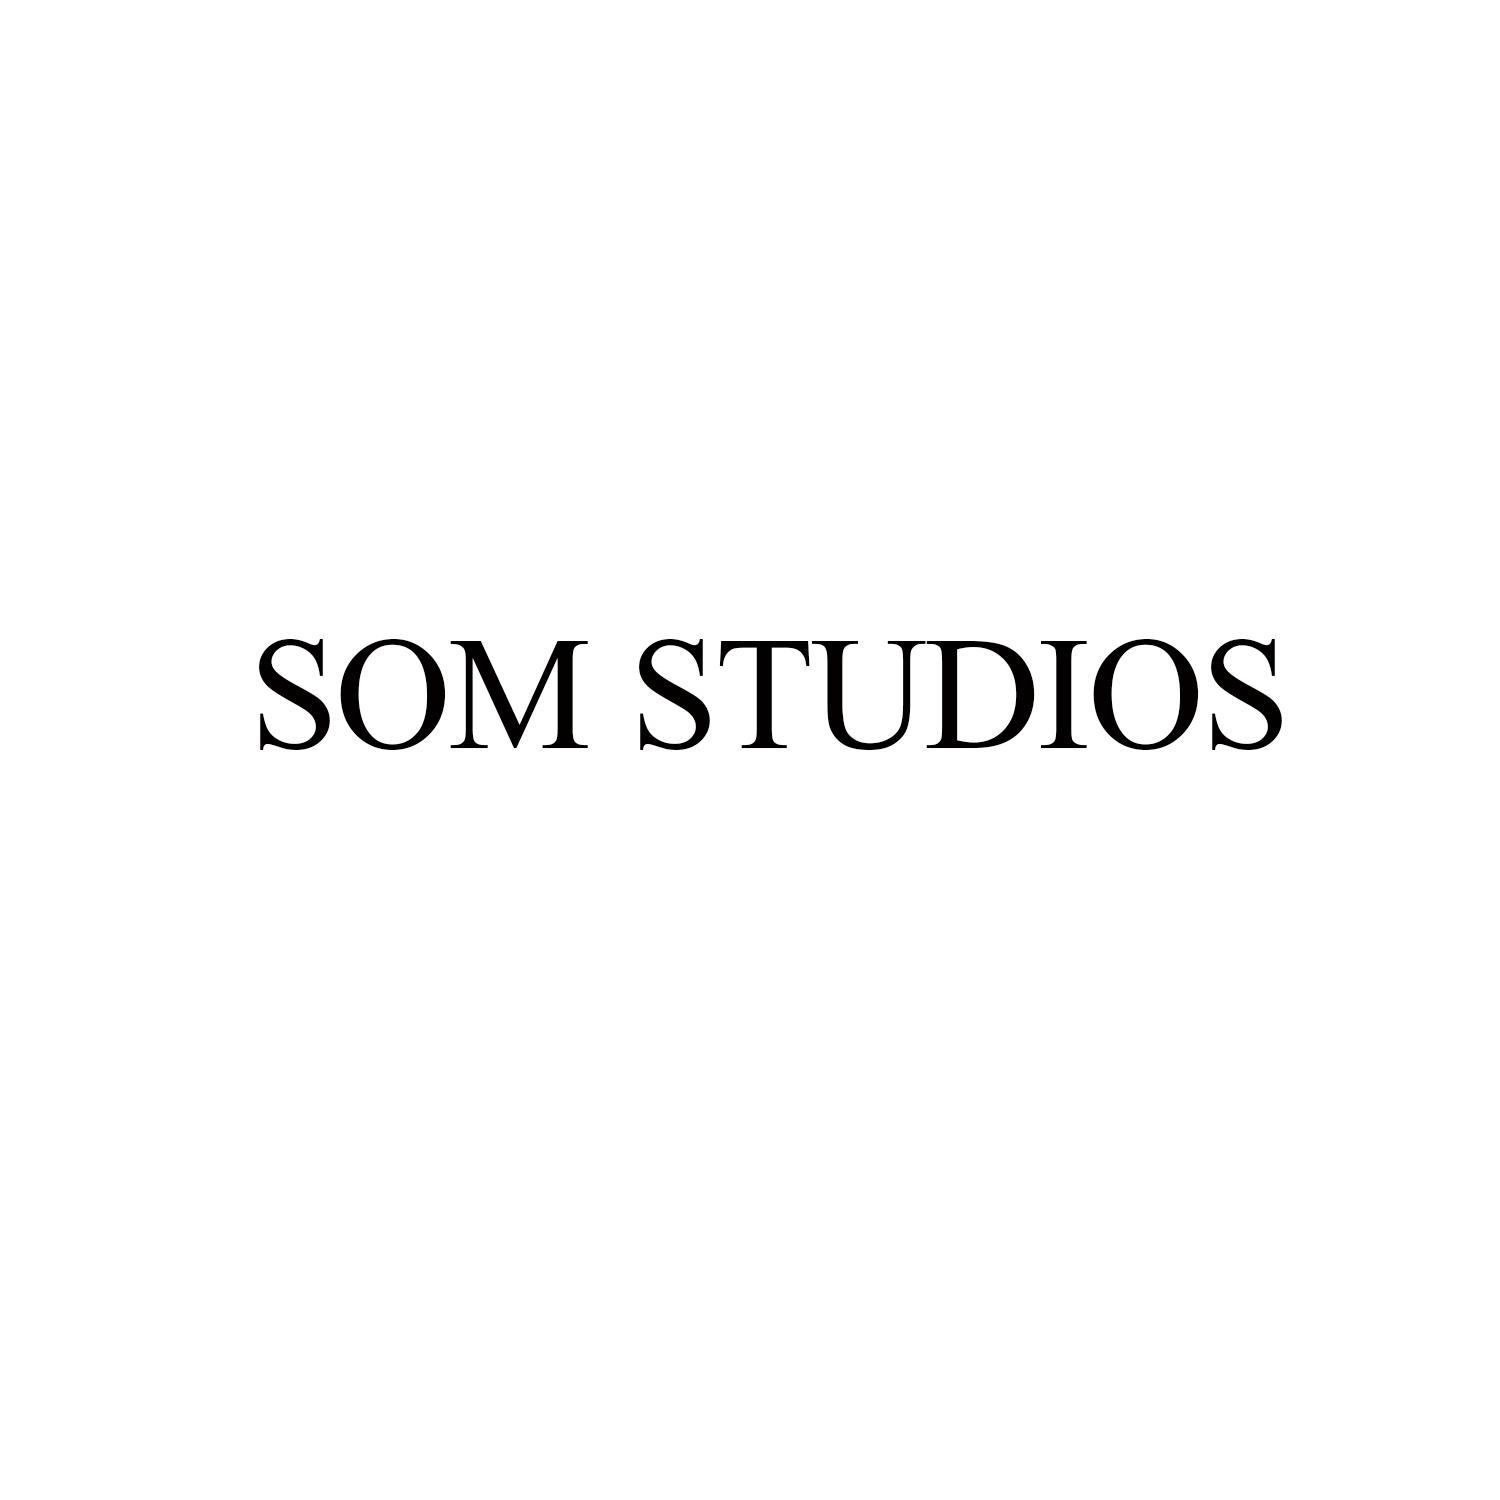 SOM STUDIOS